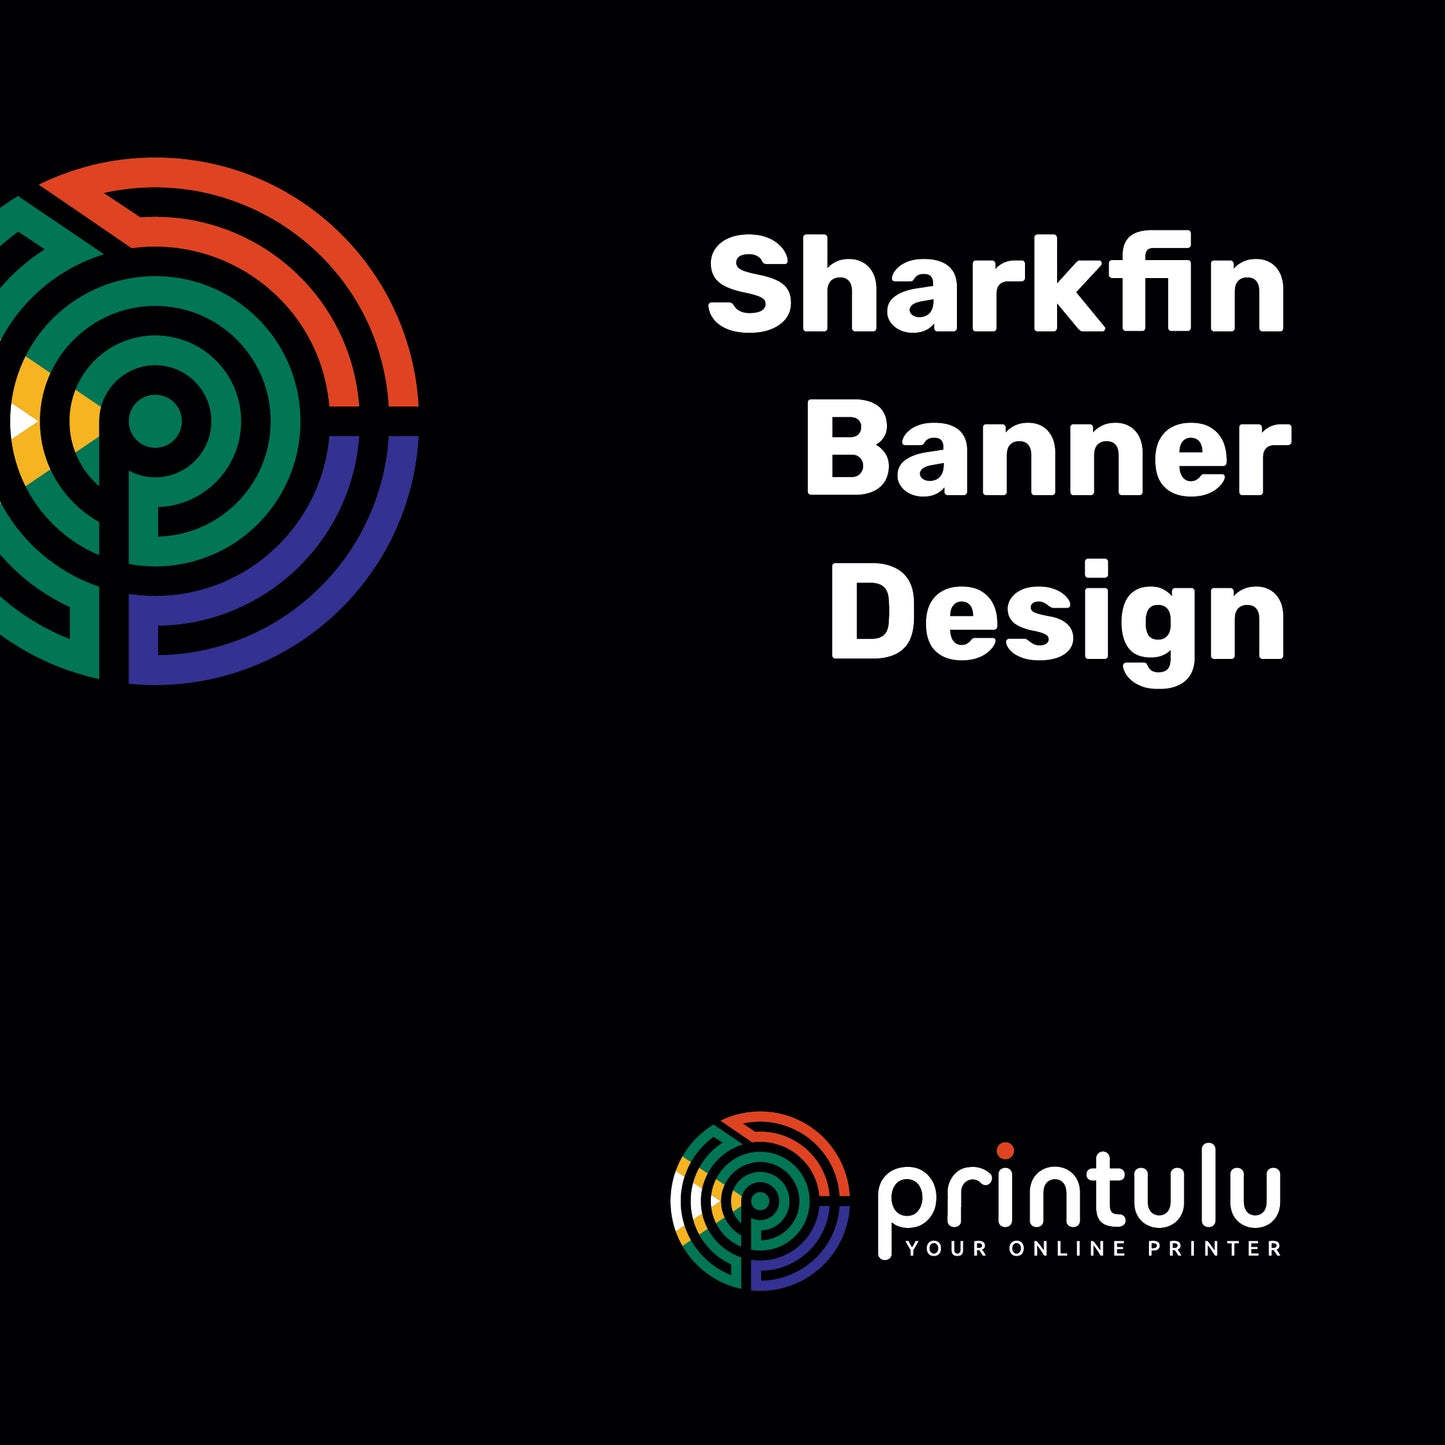 Sharkfin Banner Design